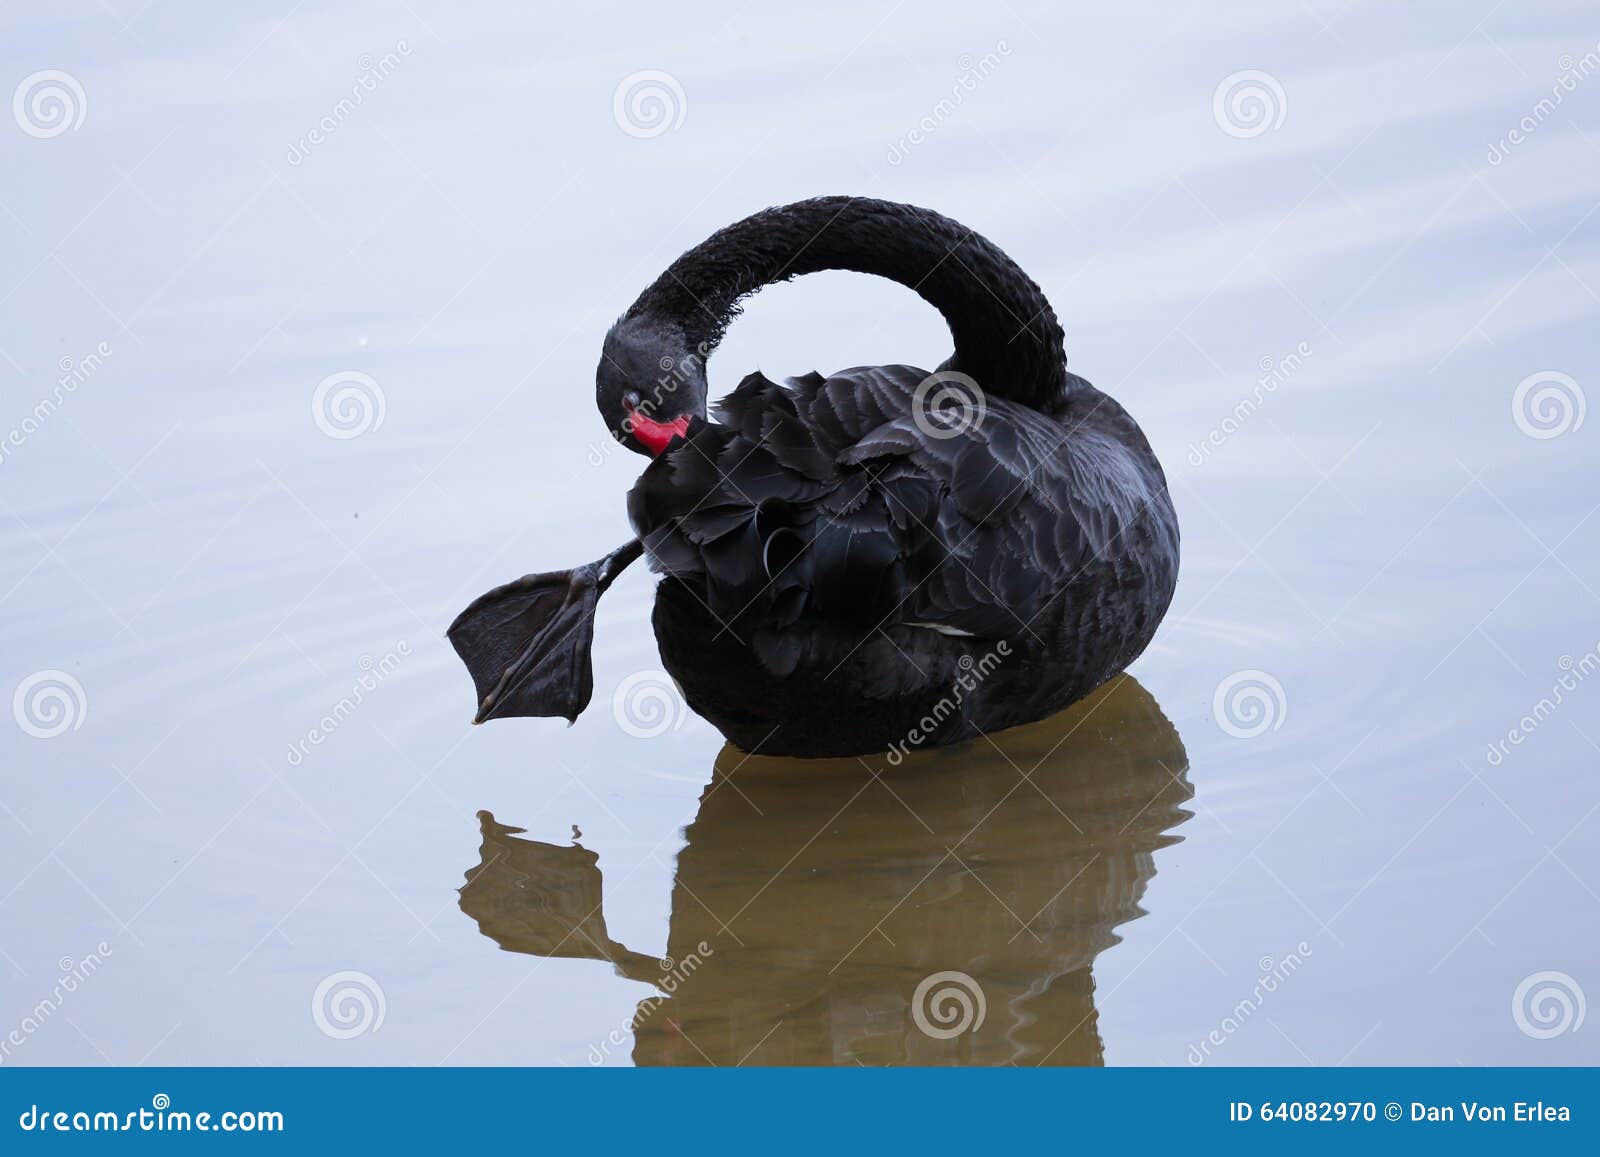 Black Swan' premiere at AFI - Los Angeles Times